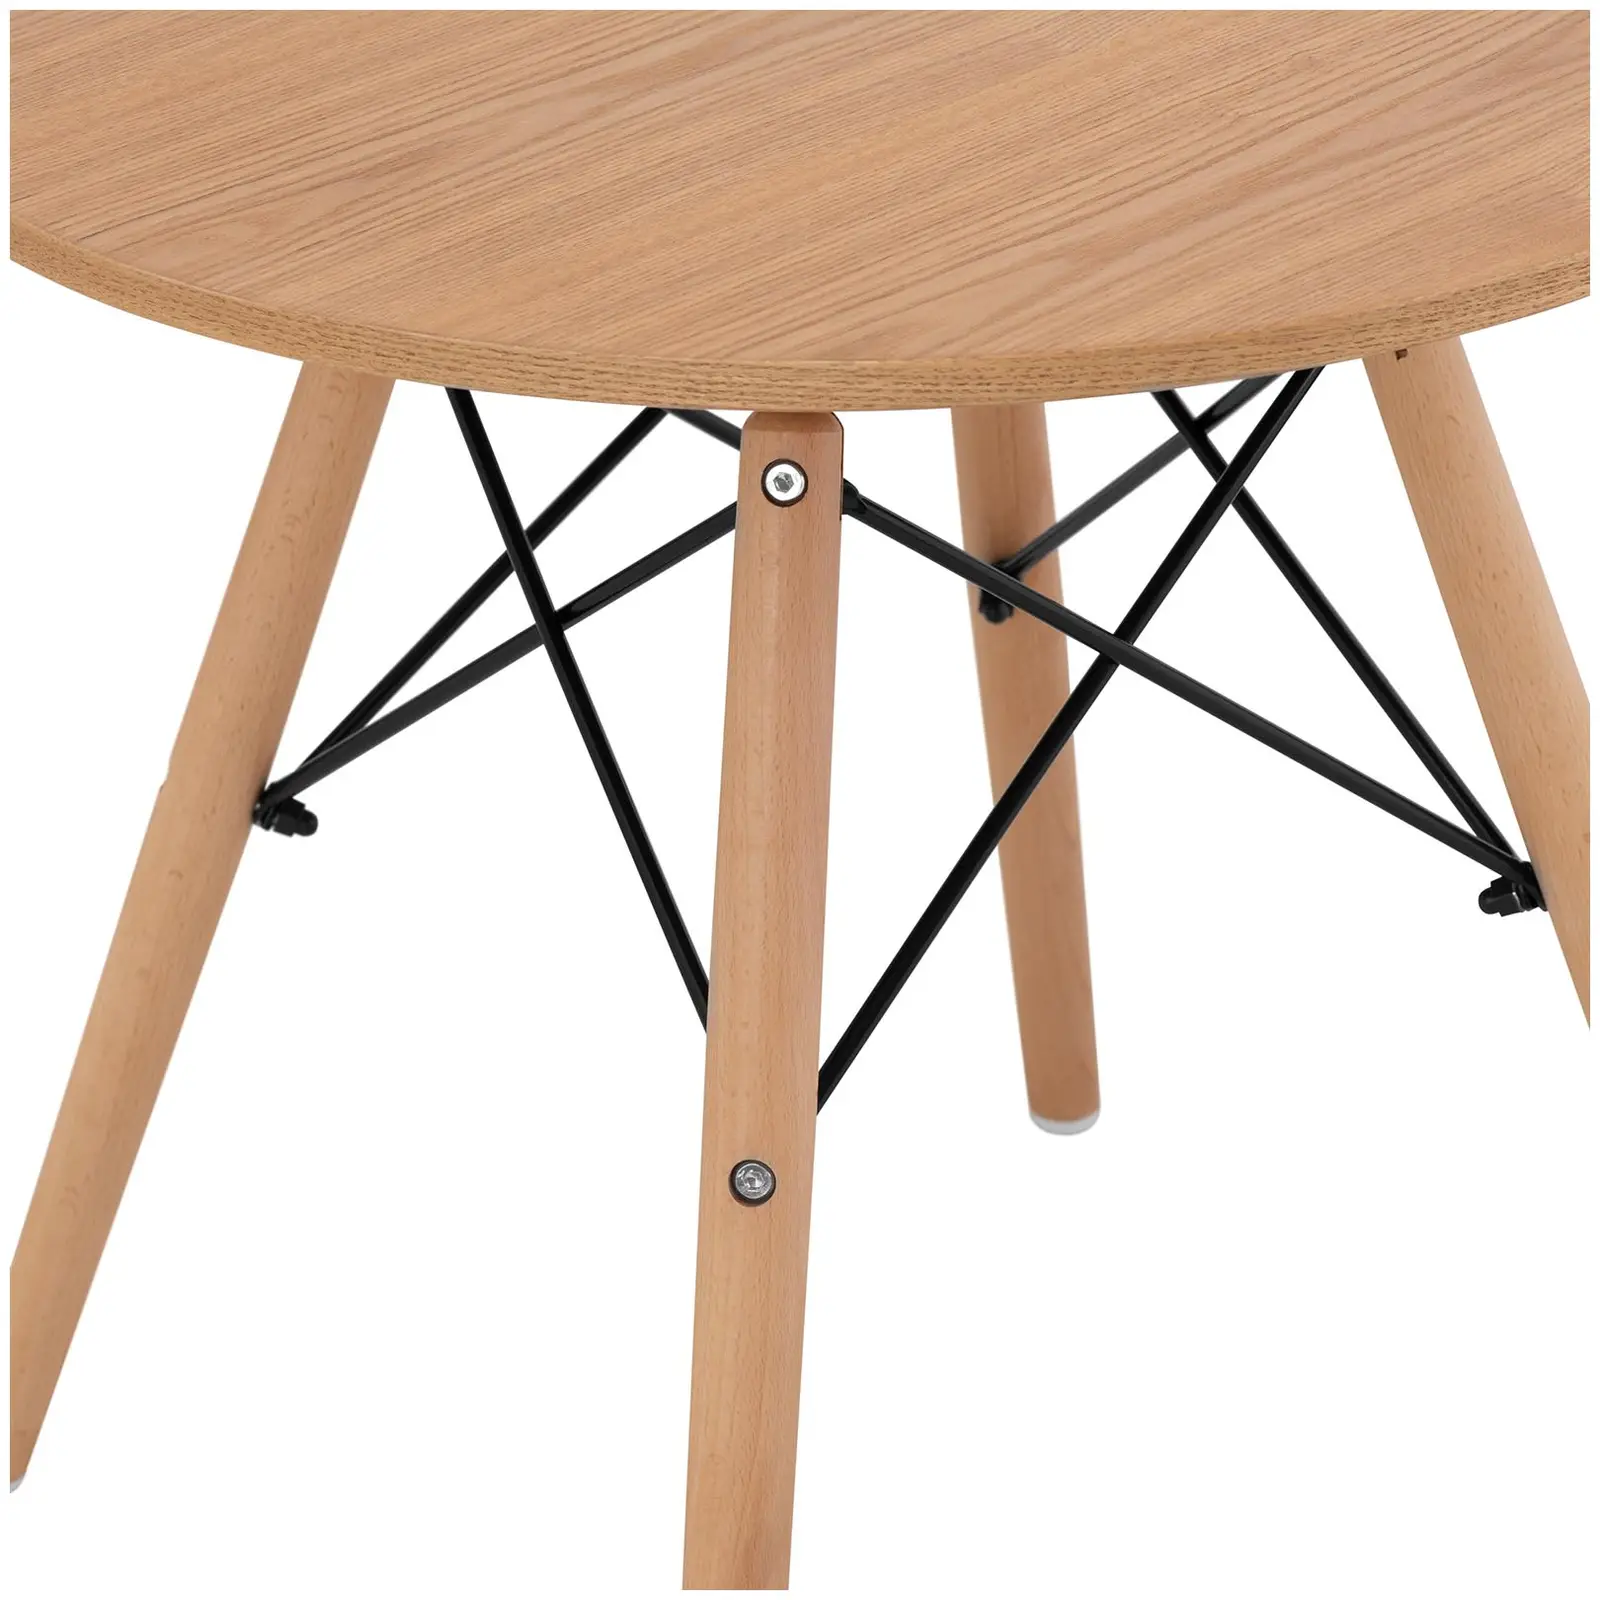 Table - round - Ø60 cm